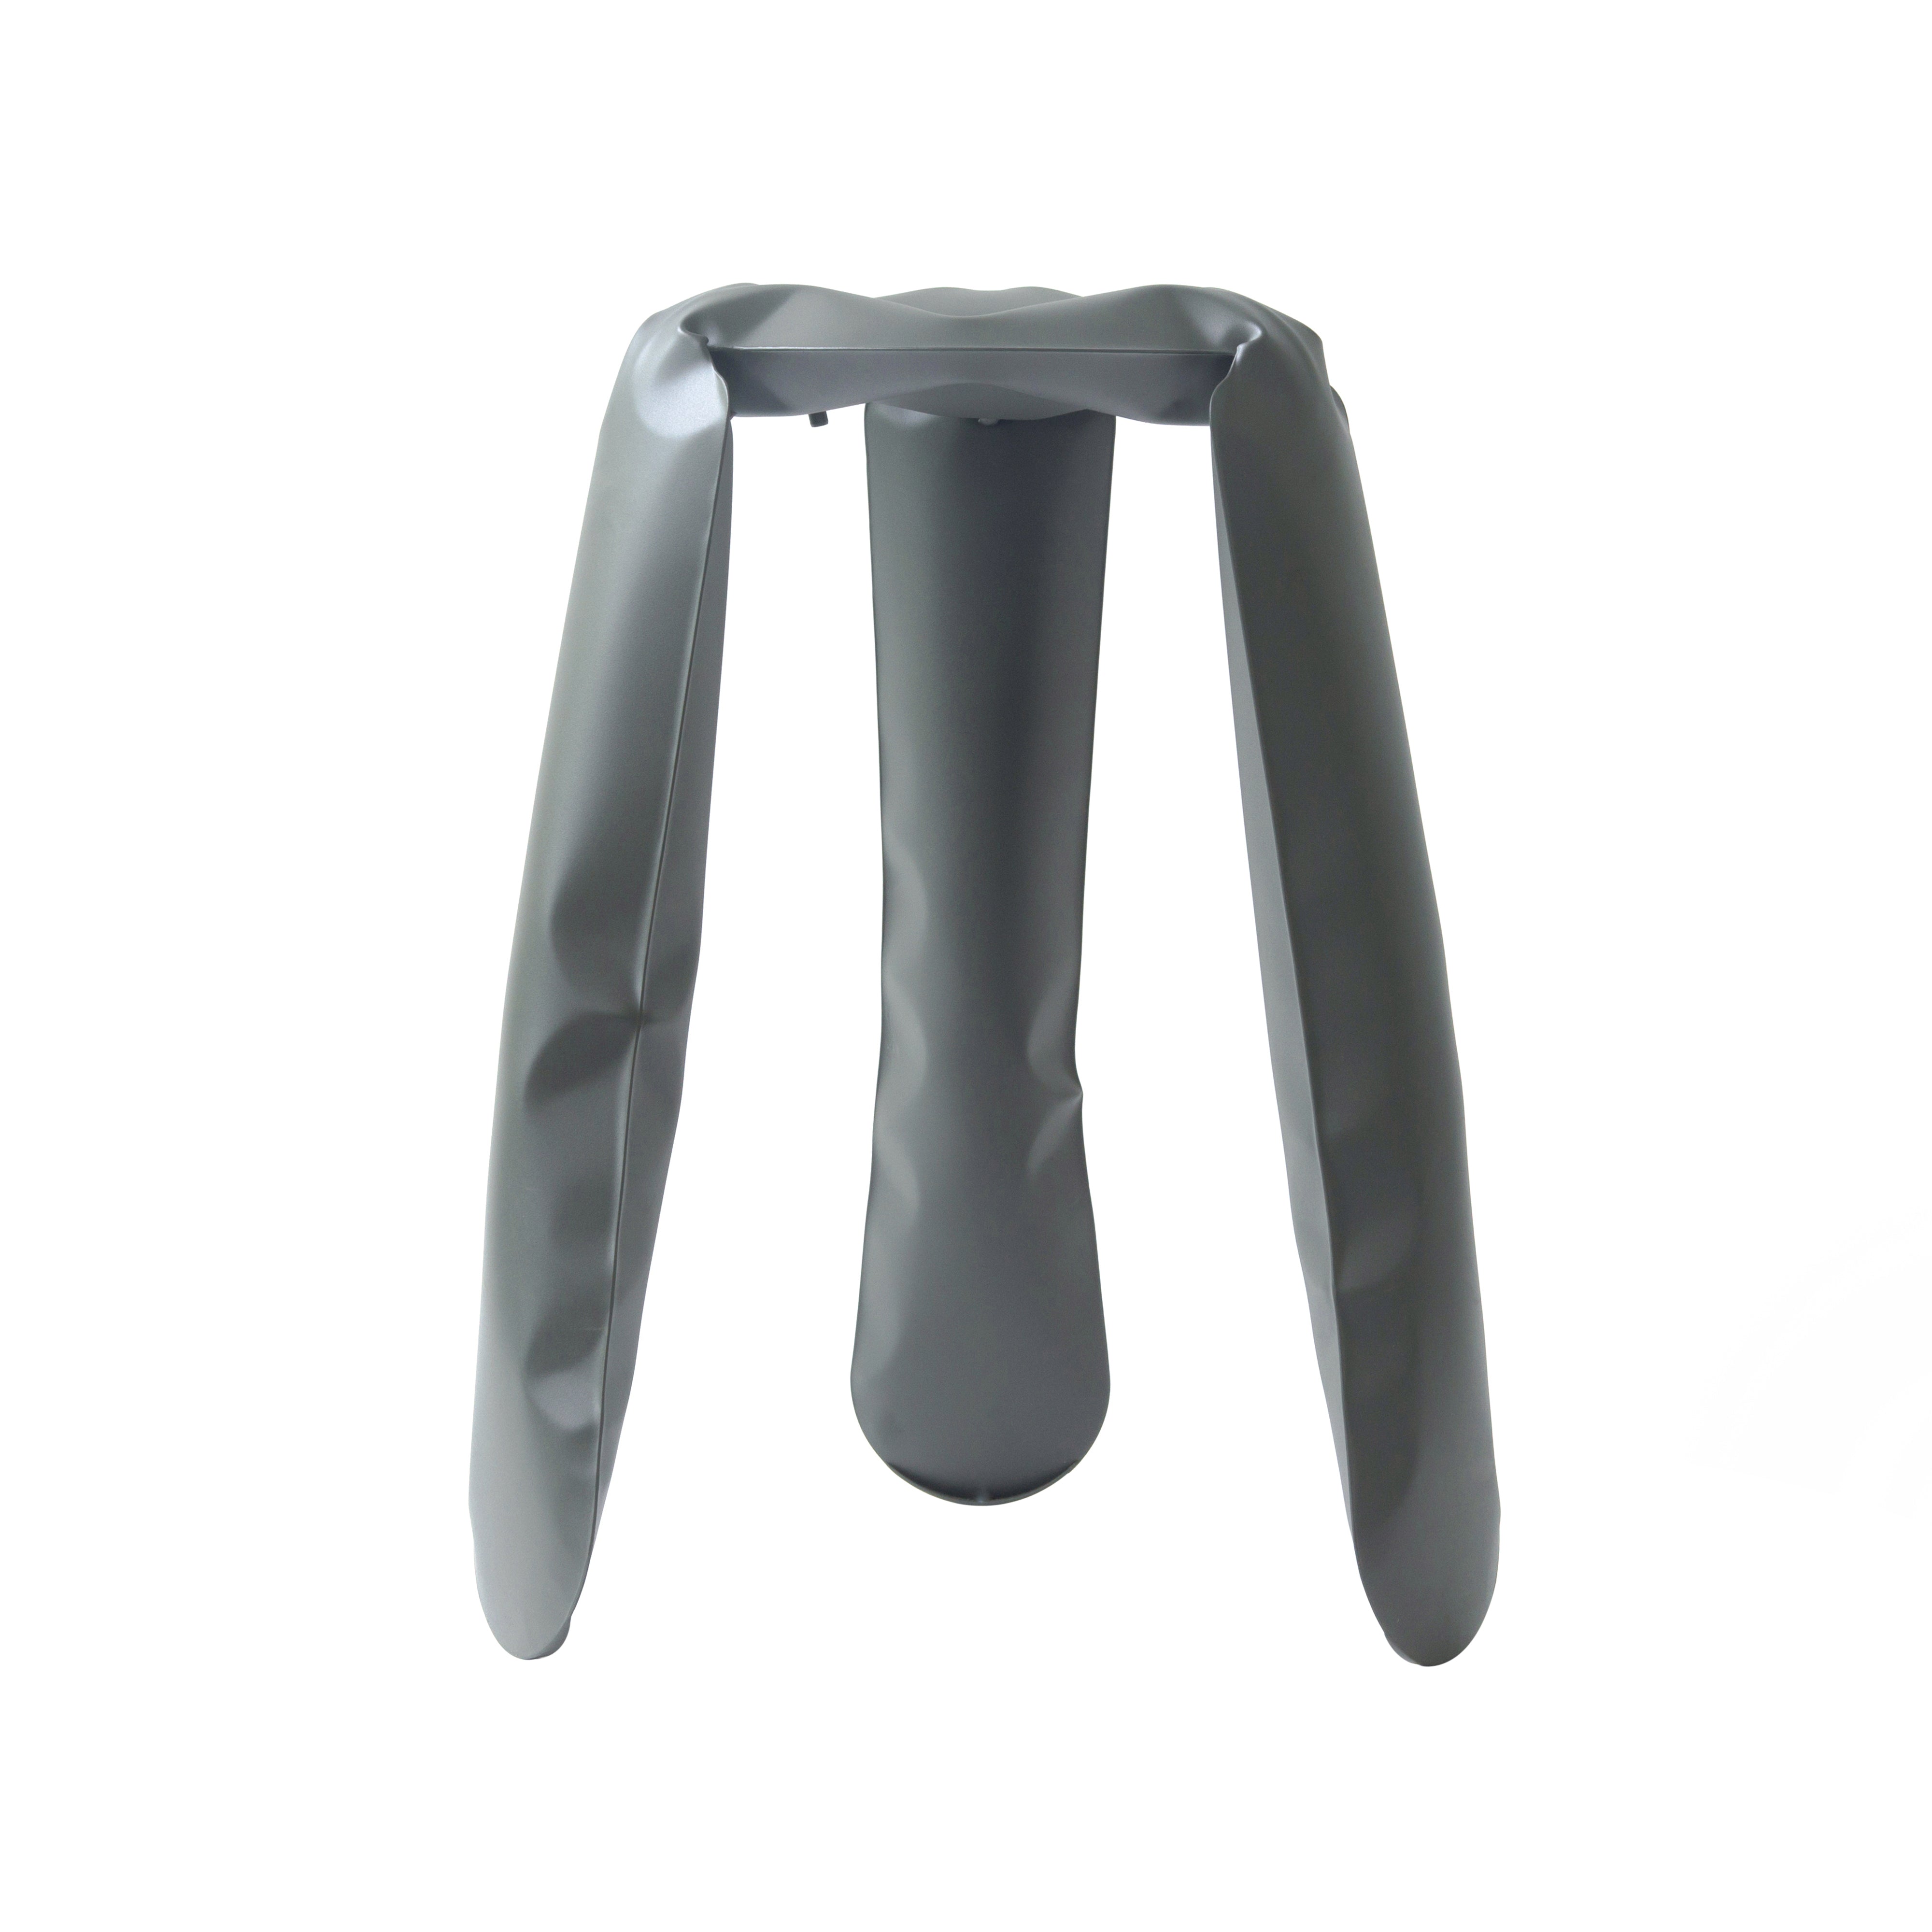 Plopp Kitchen Stool: Umbra Grey + Carbon Steel